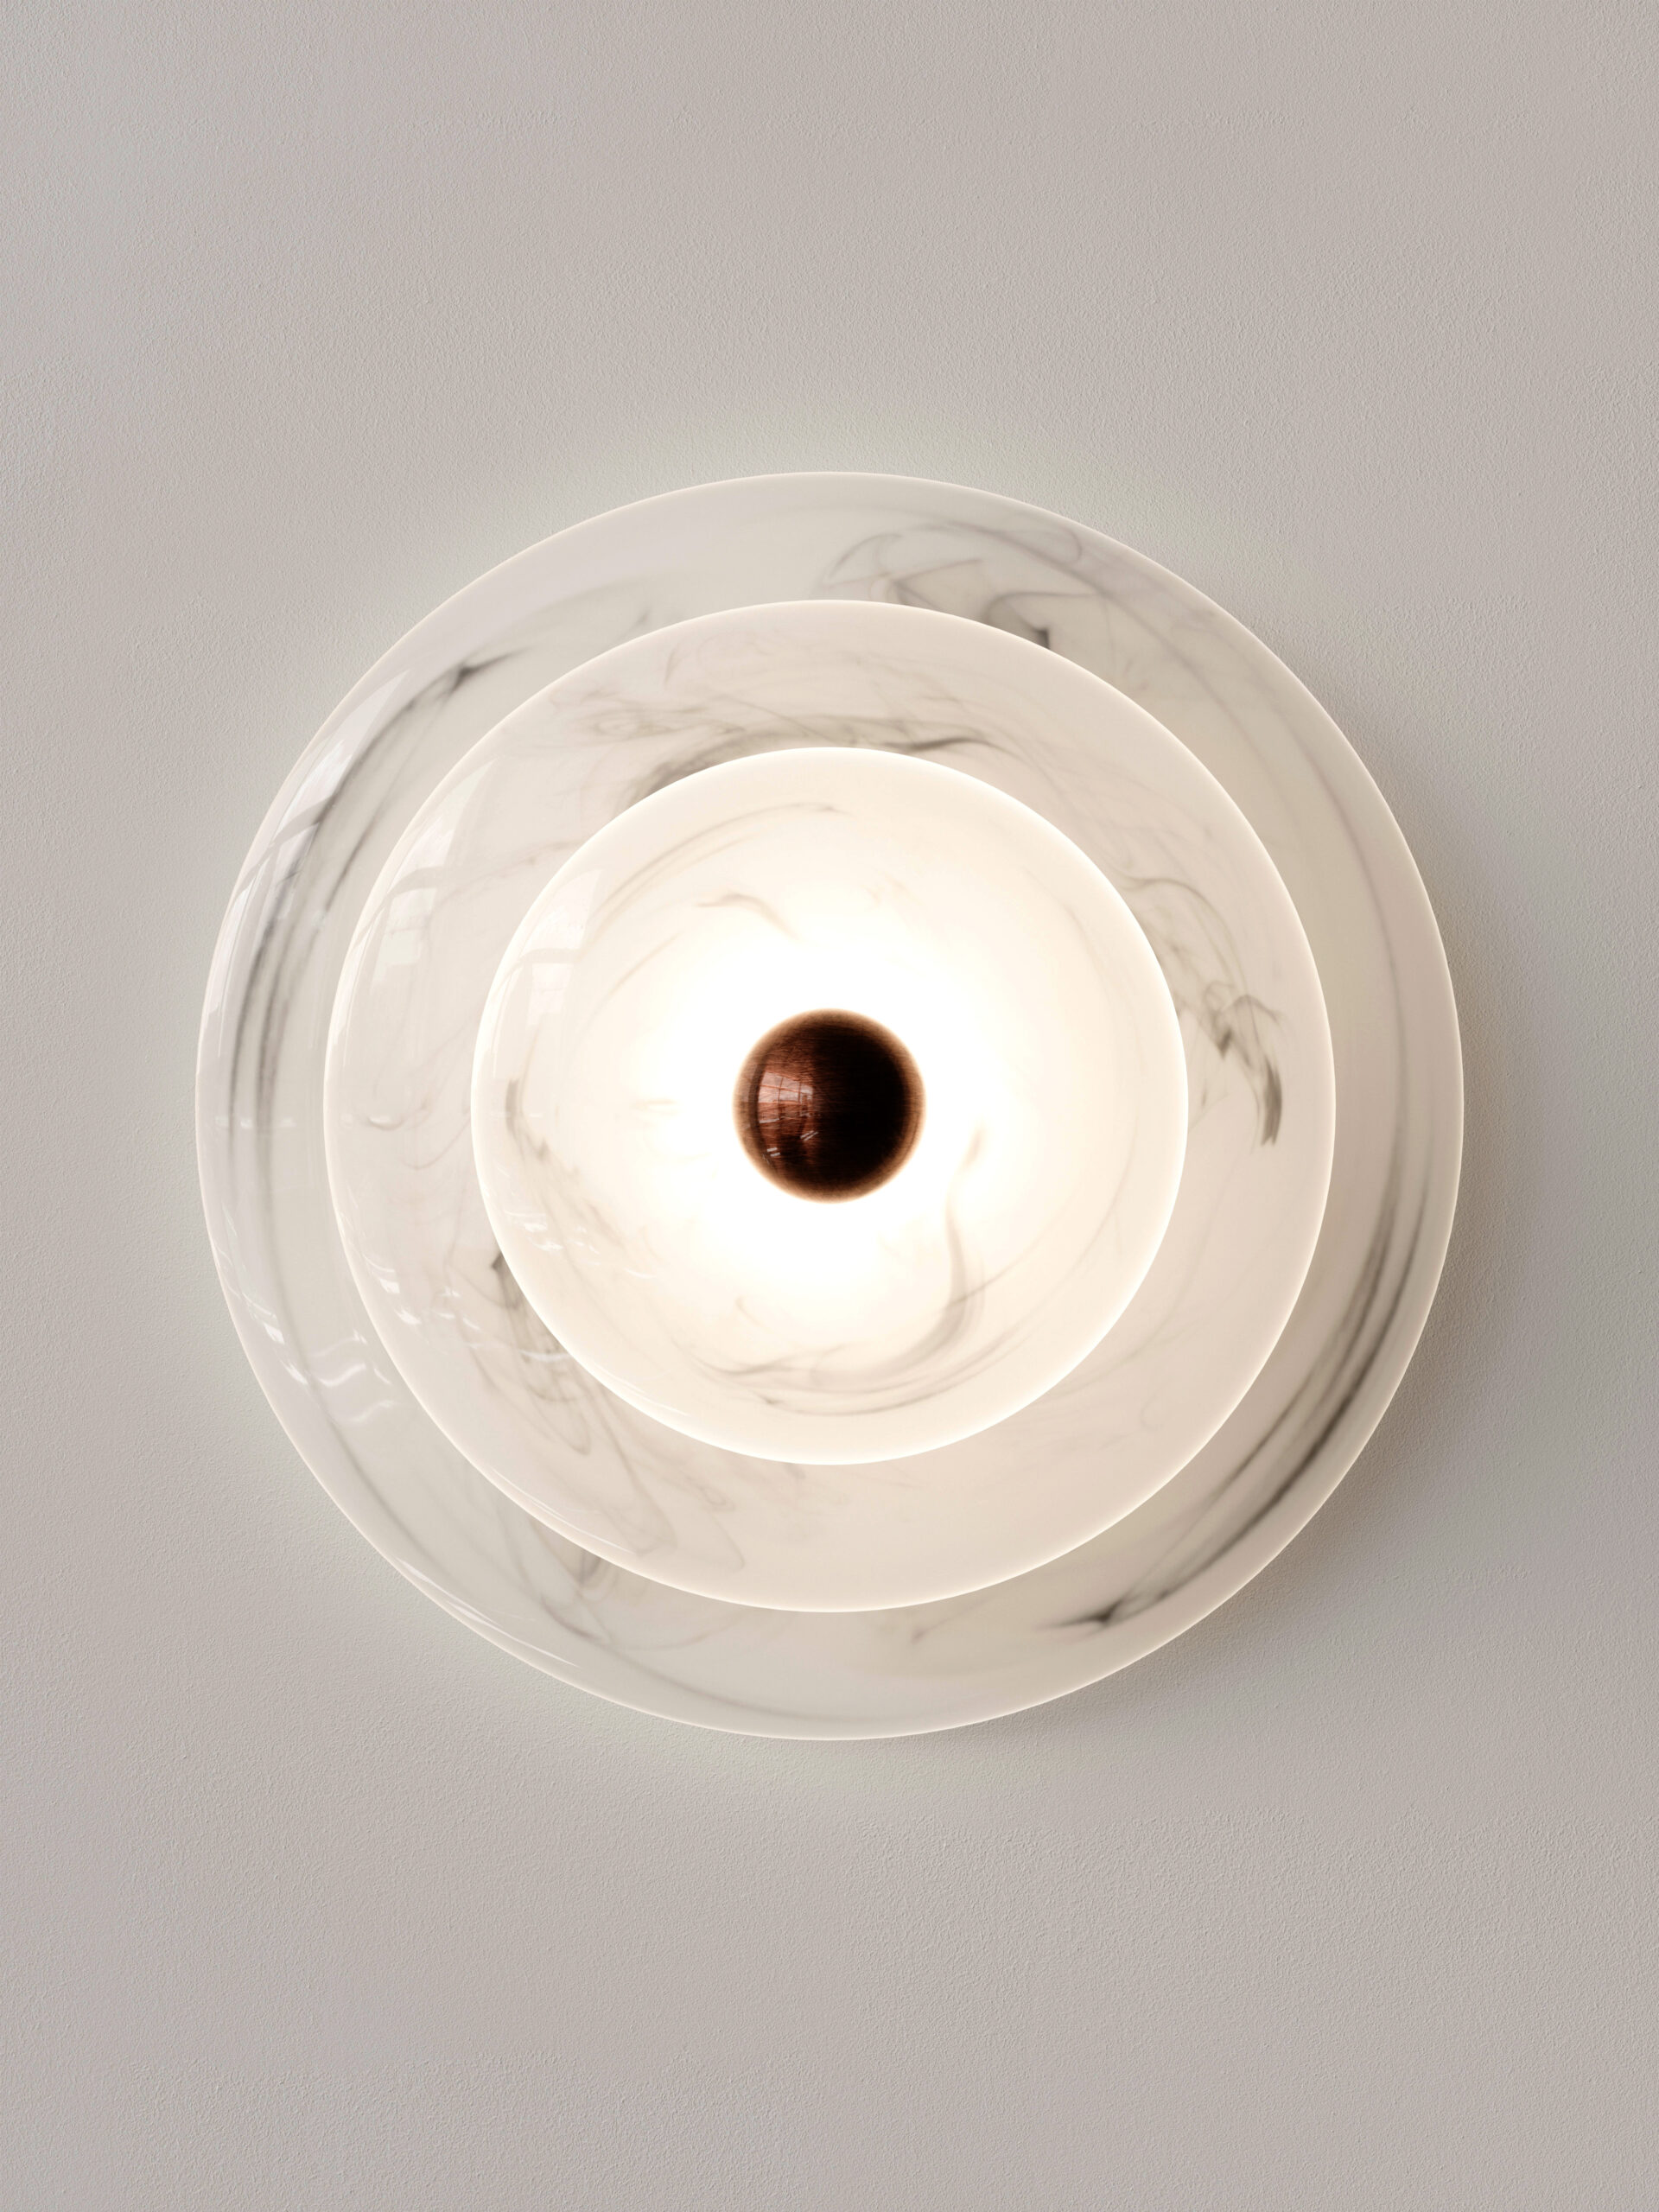 Sleek Stylish Pendant Light Three Tiered Handmade Glass Discs Metal Orb Design Manufacture Nulty Bespoke